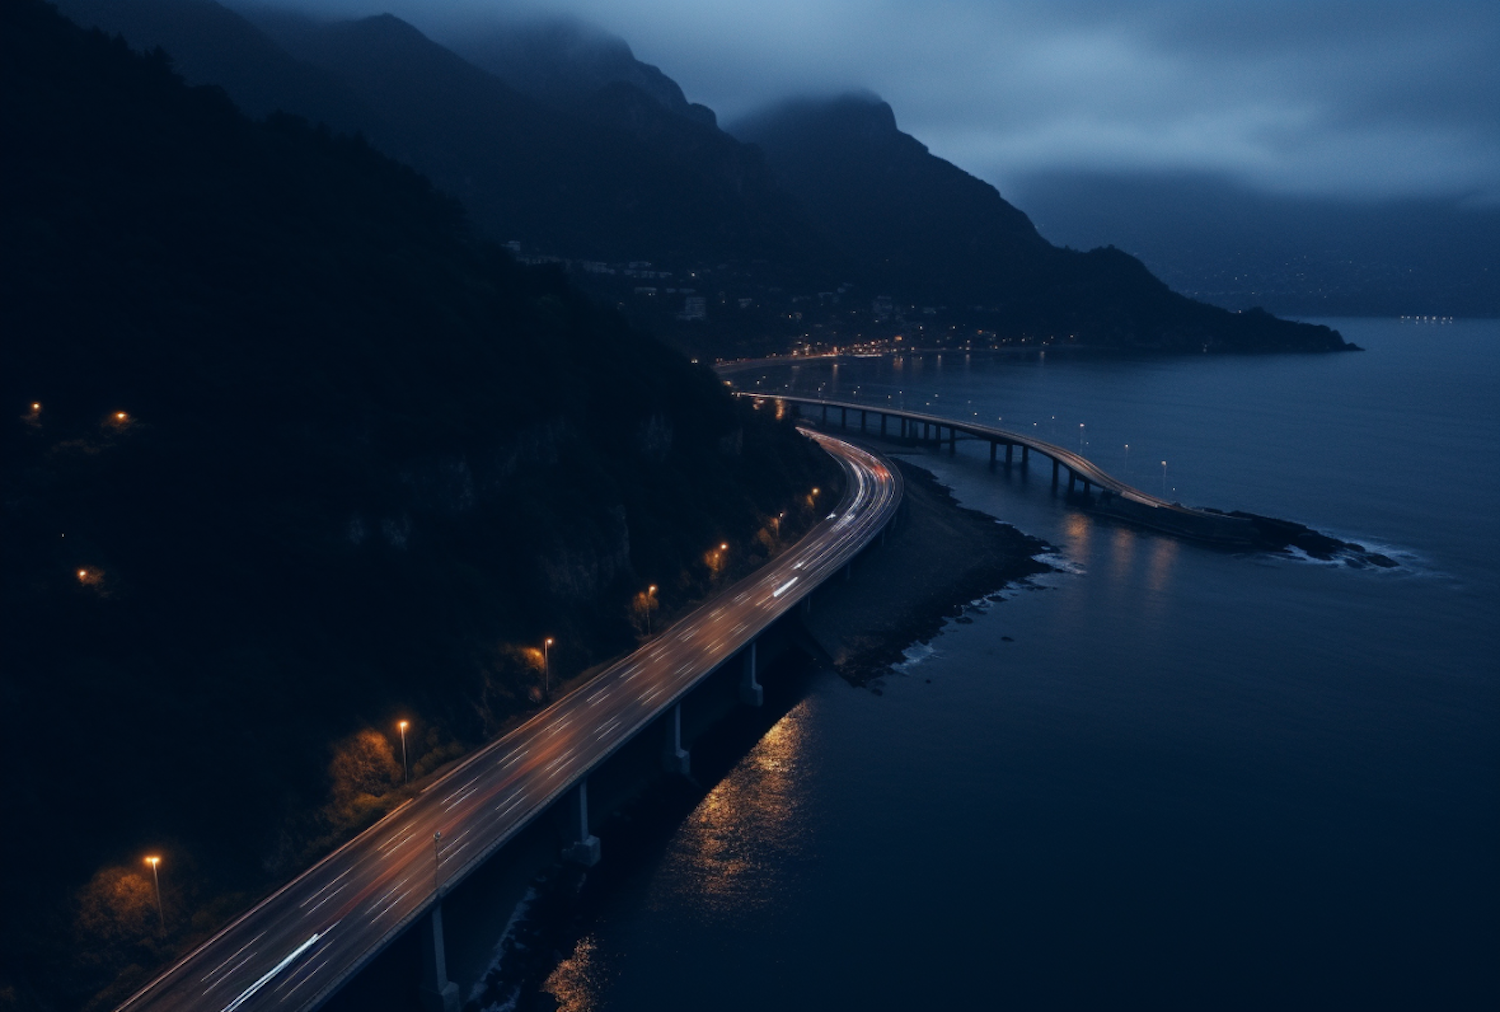 Twilight Serenity: The Bridge of Lights